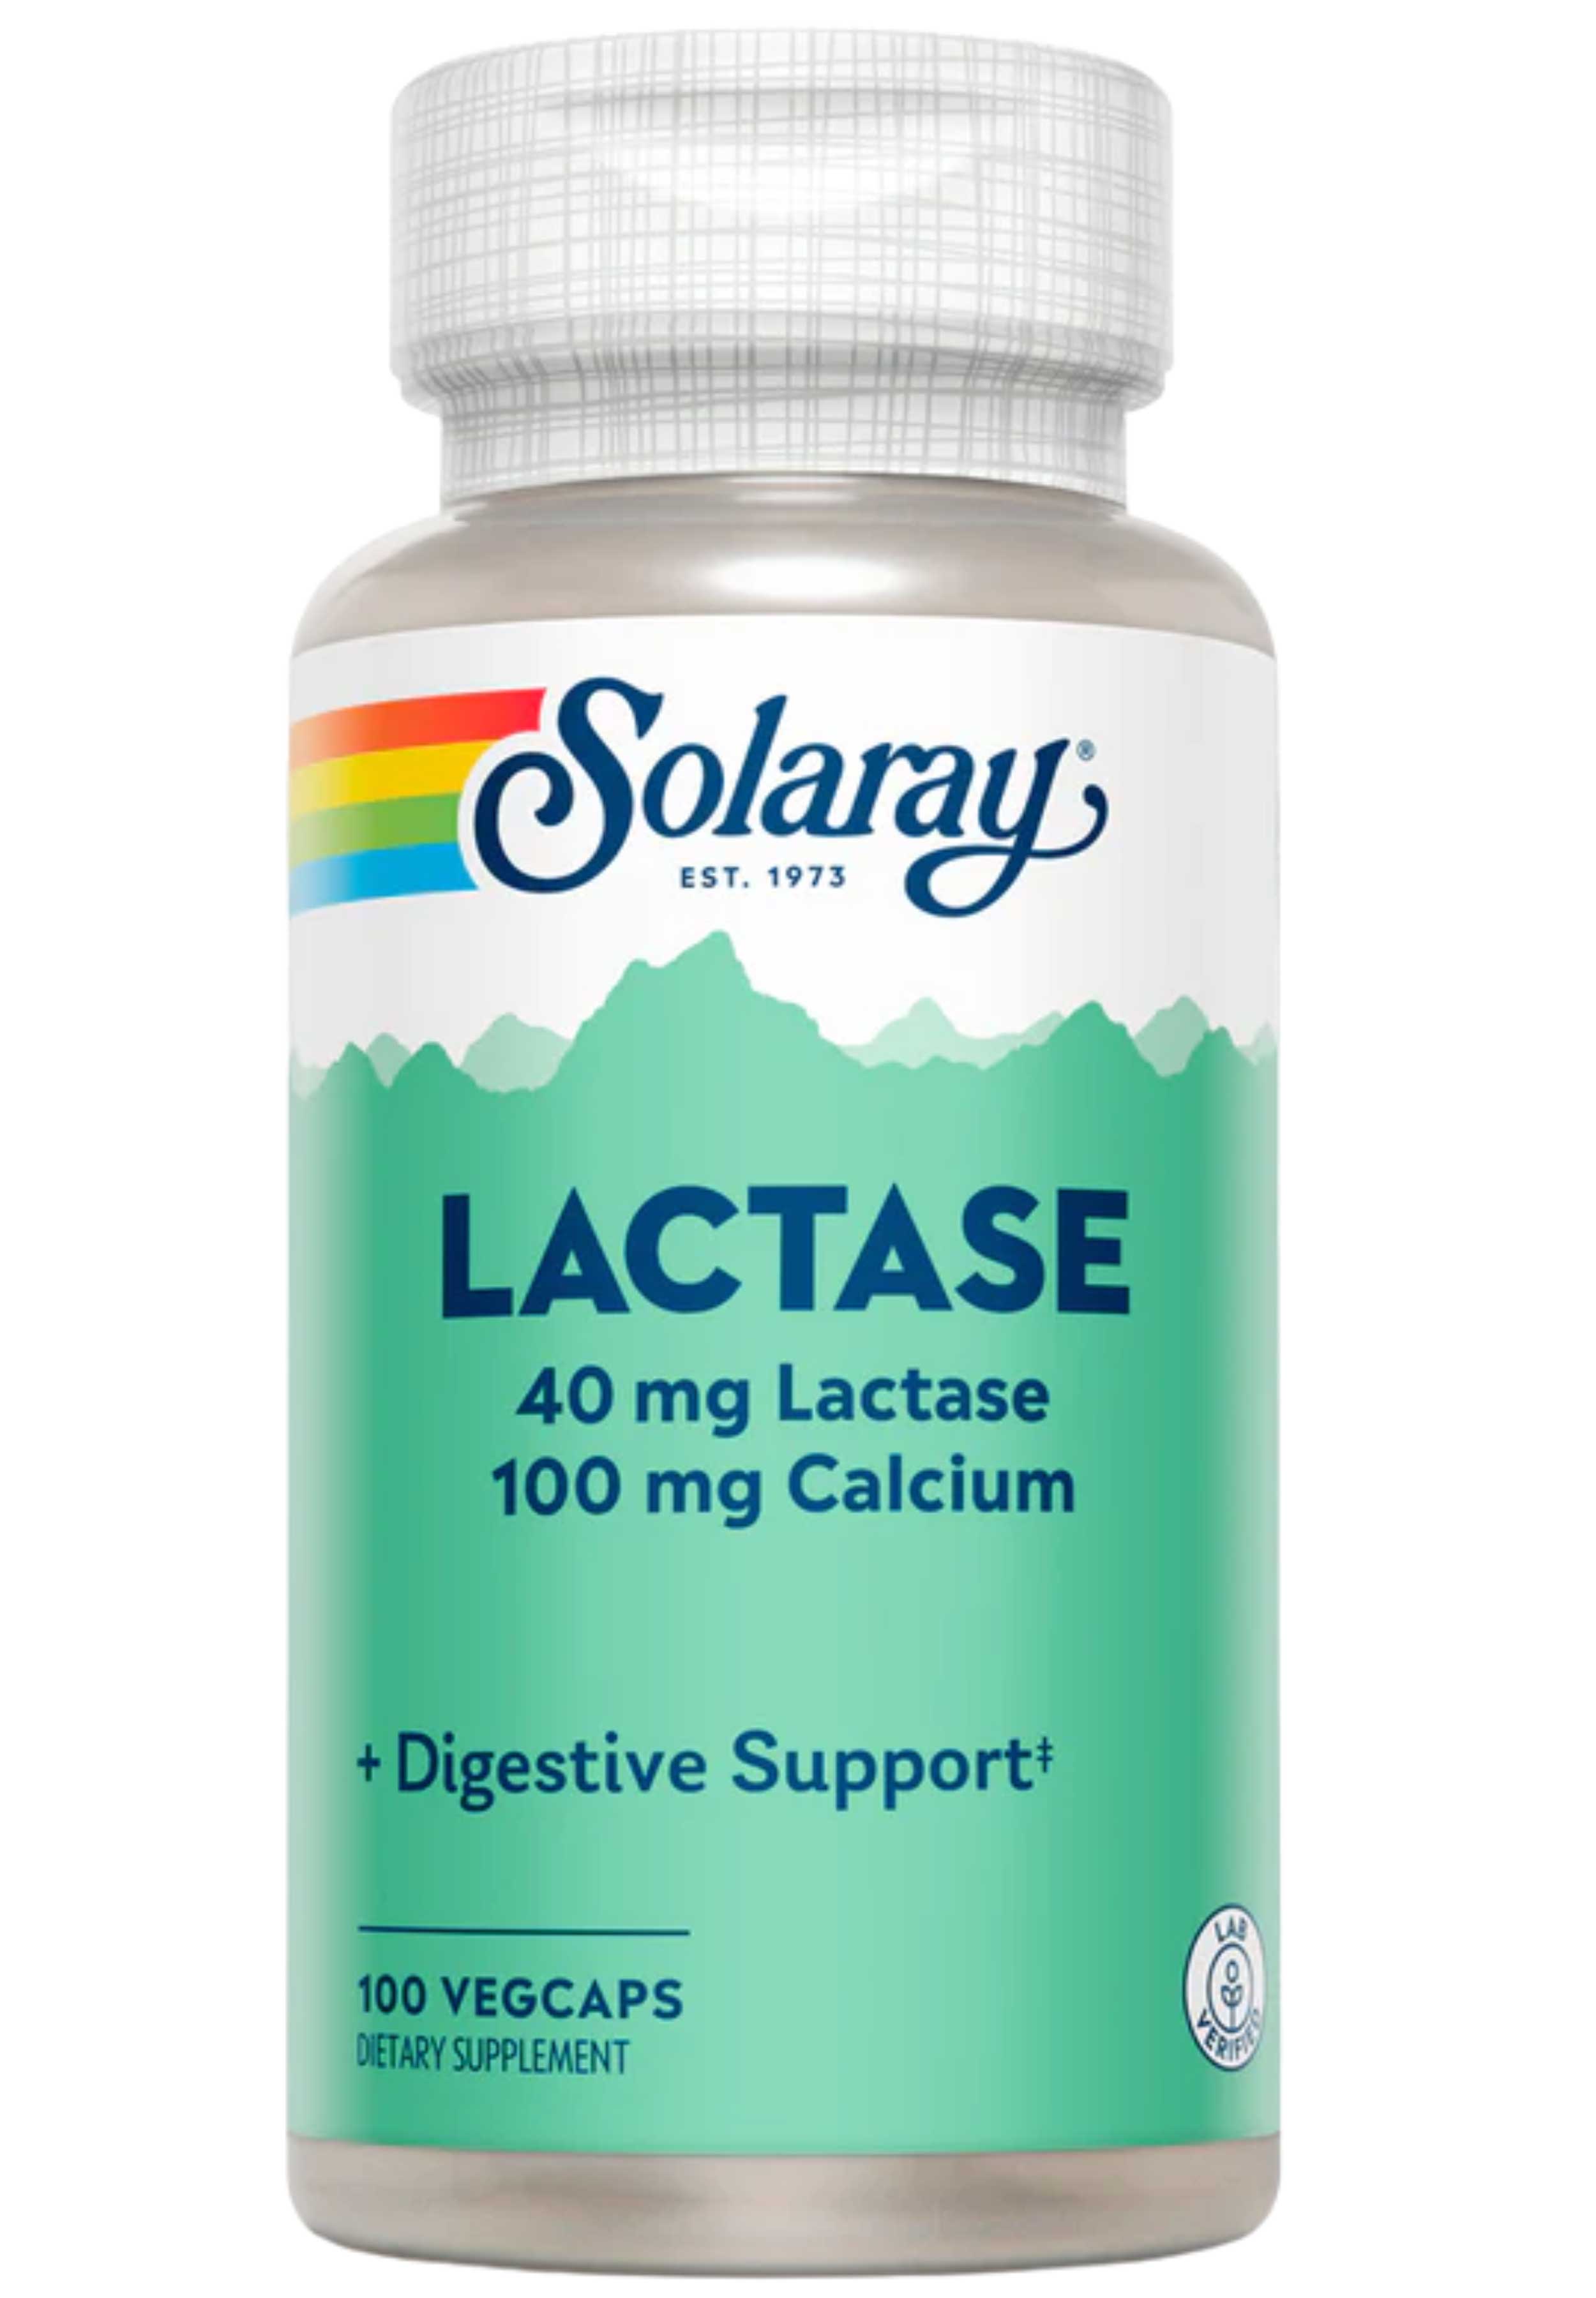 Solaray Lactase 40 mg